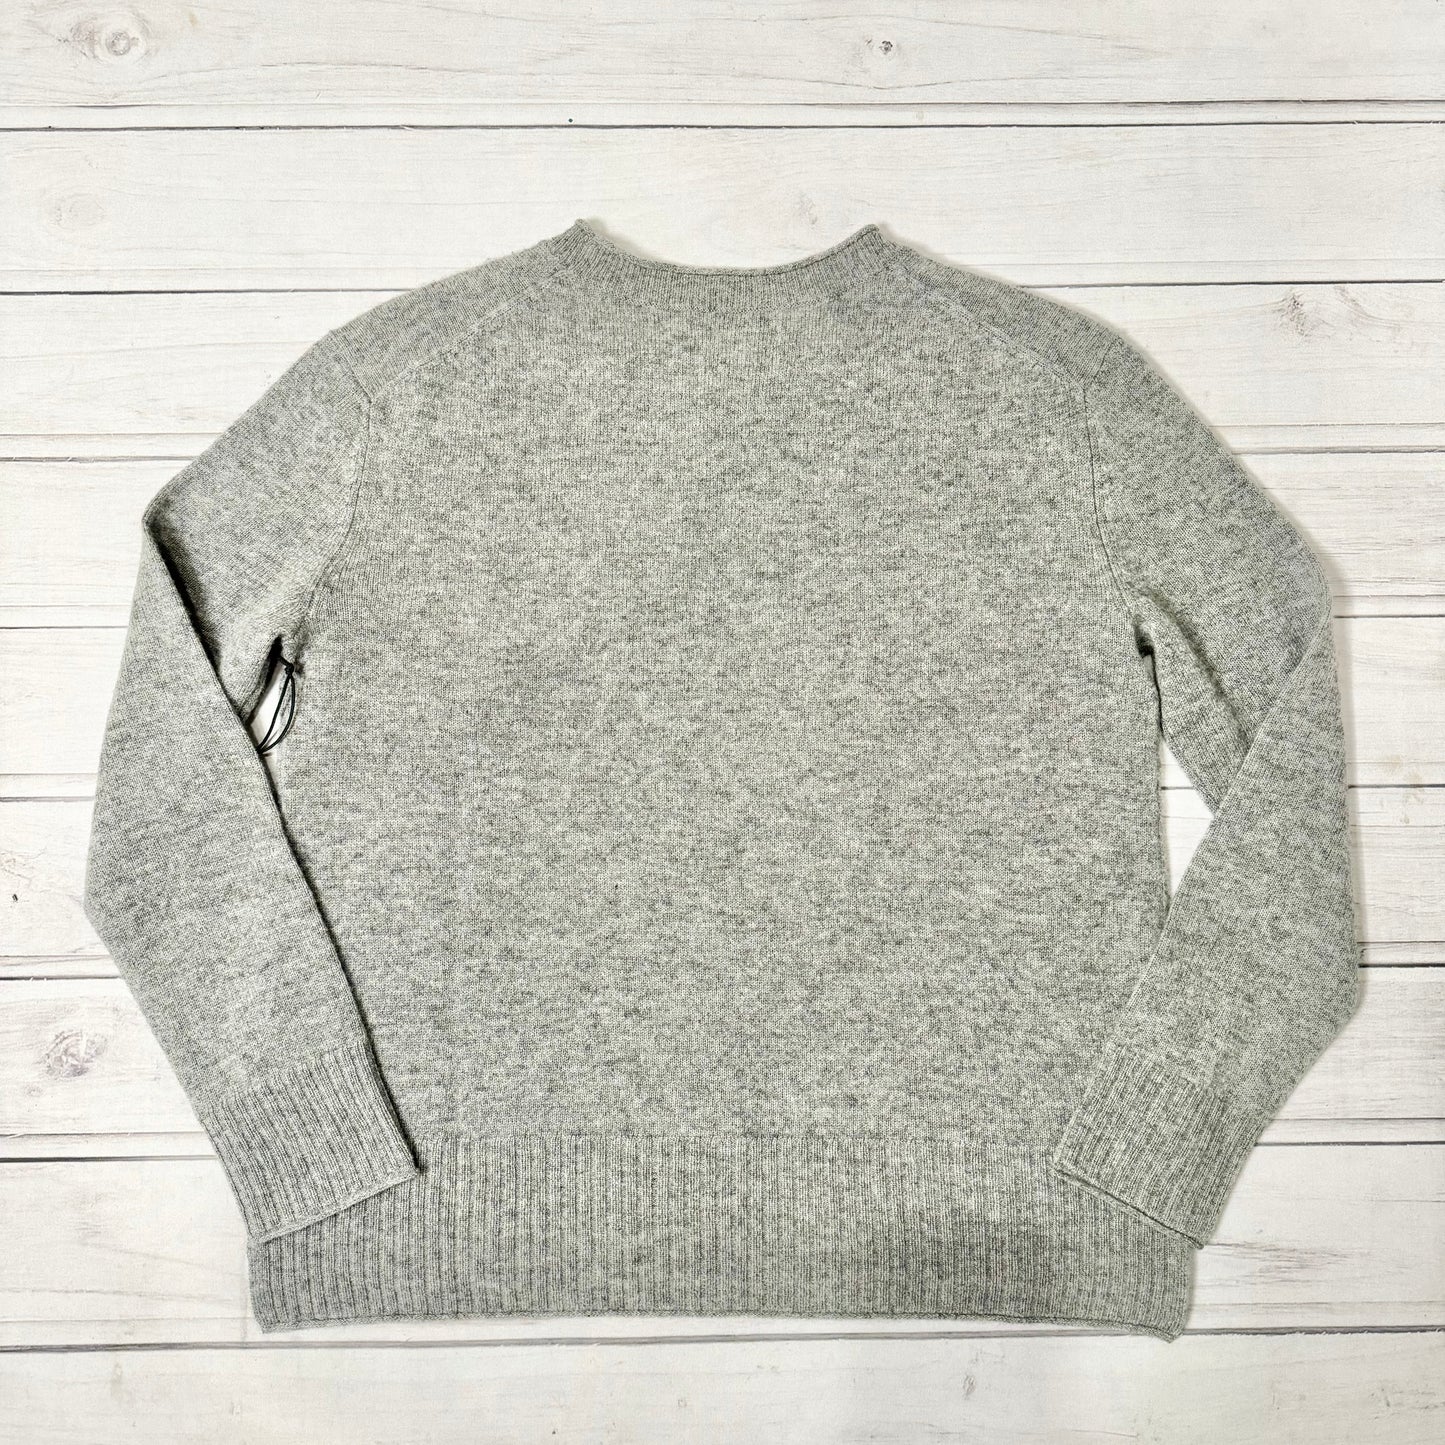 Sweater Designer By Rachel Zoe  Size: S